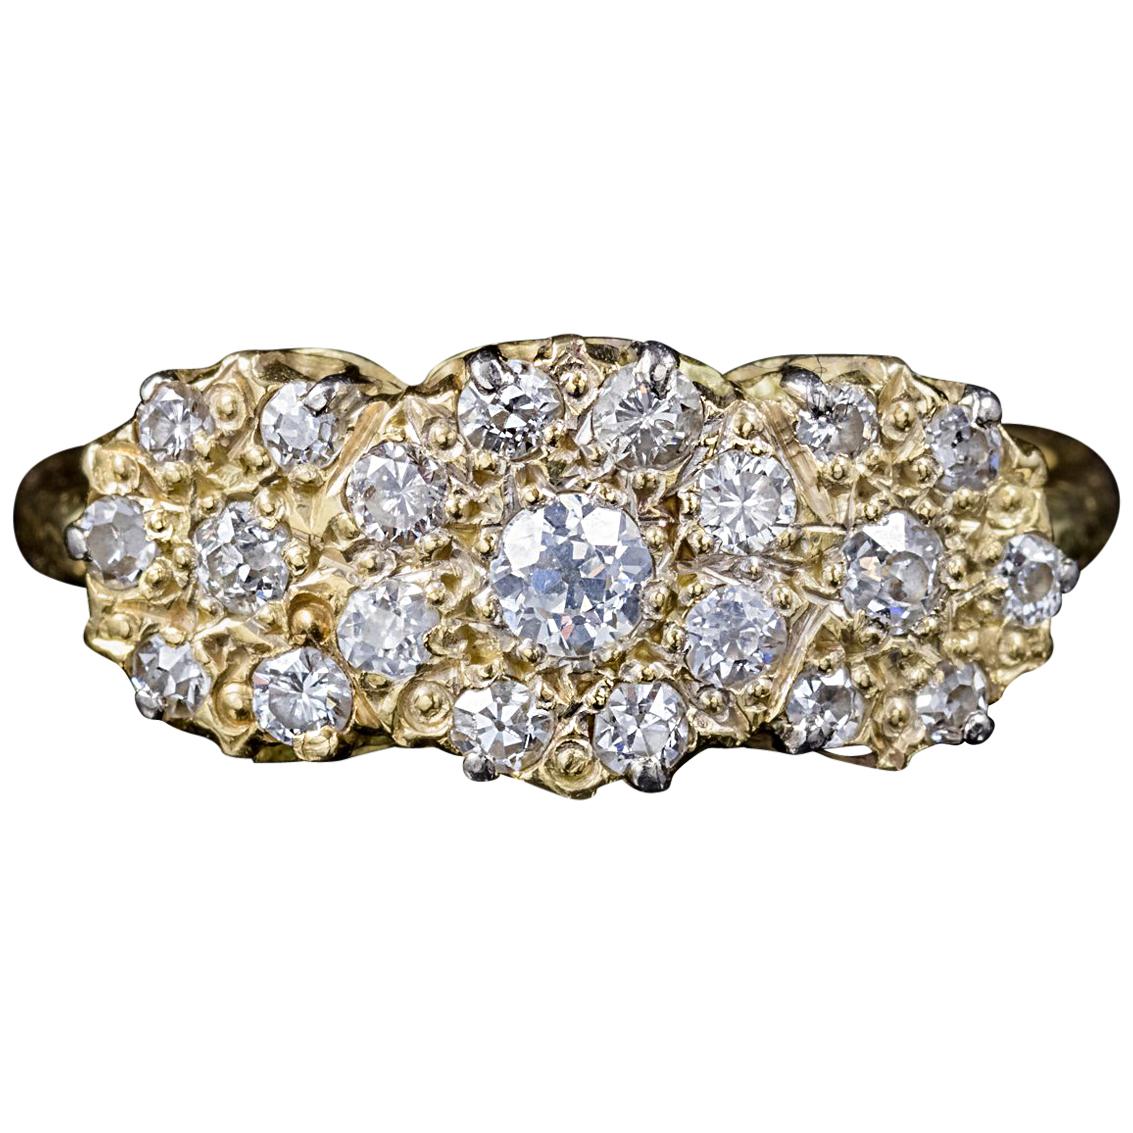 Antique Victorian Diamond Cluster Ring 18 Carat Gold 1 Carat of Diamond